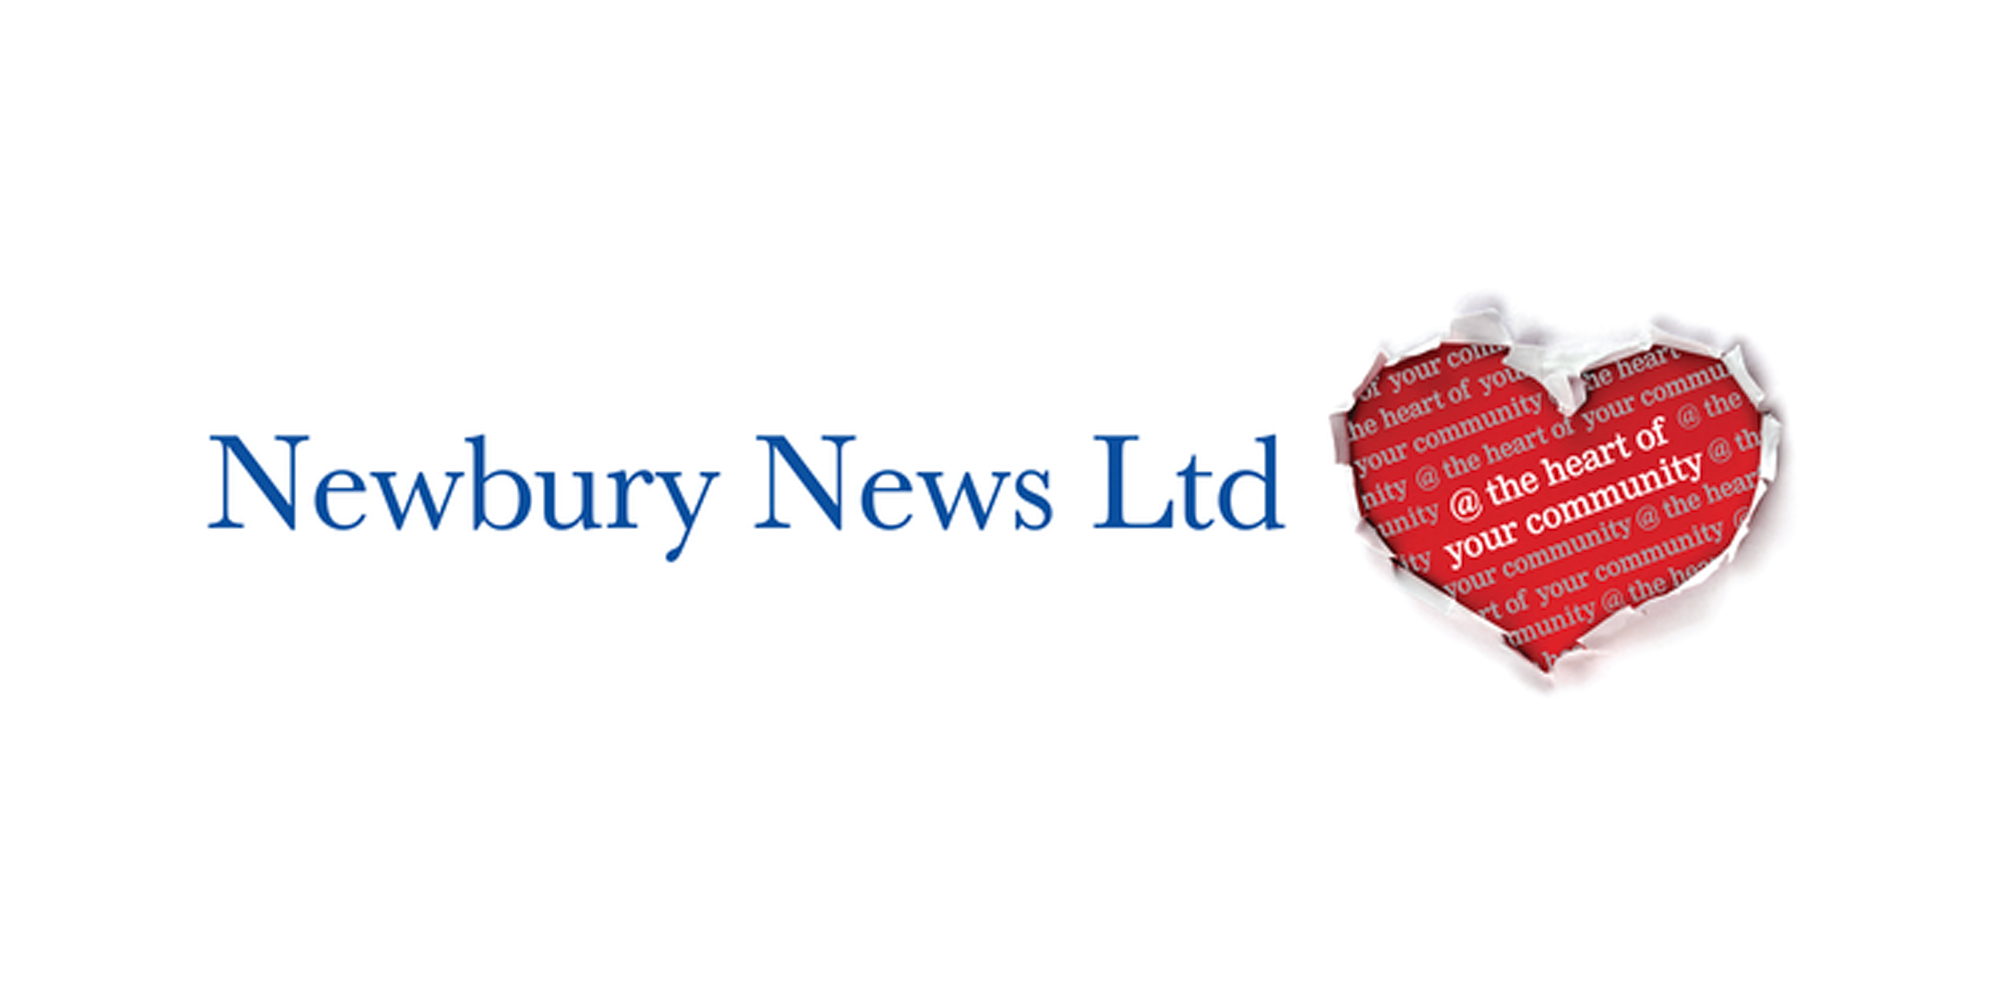 Newbury News and Media Ltd